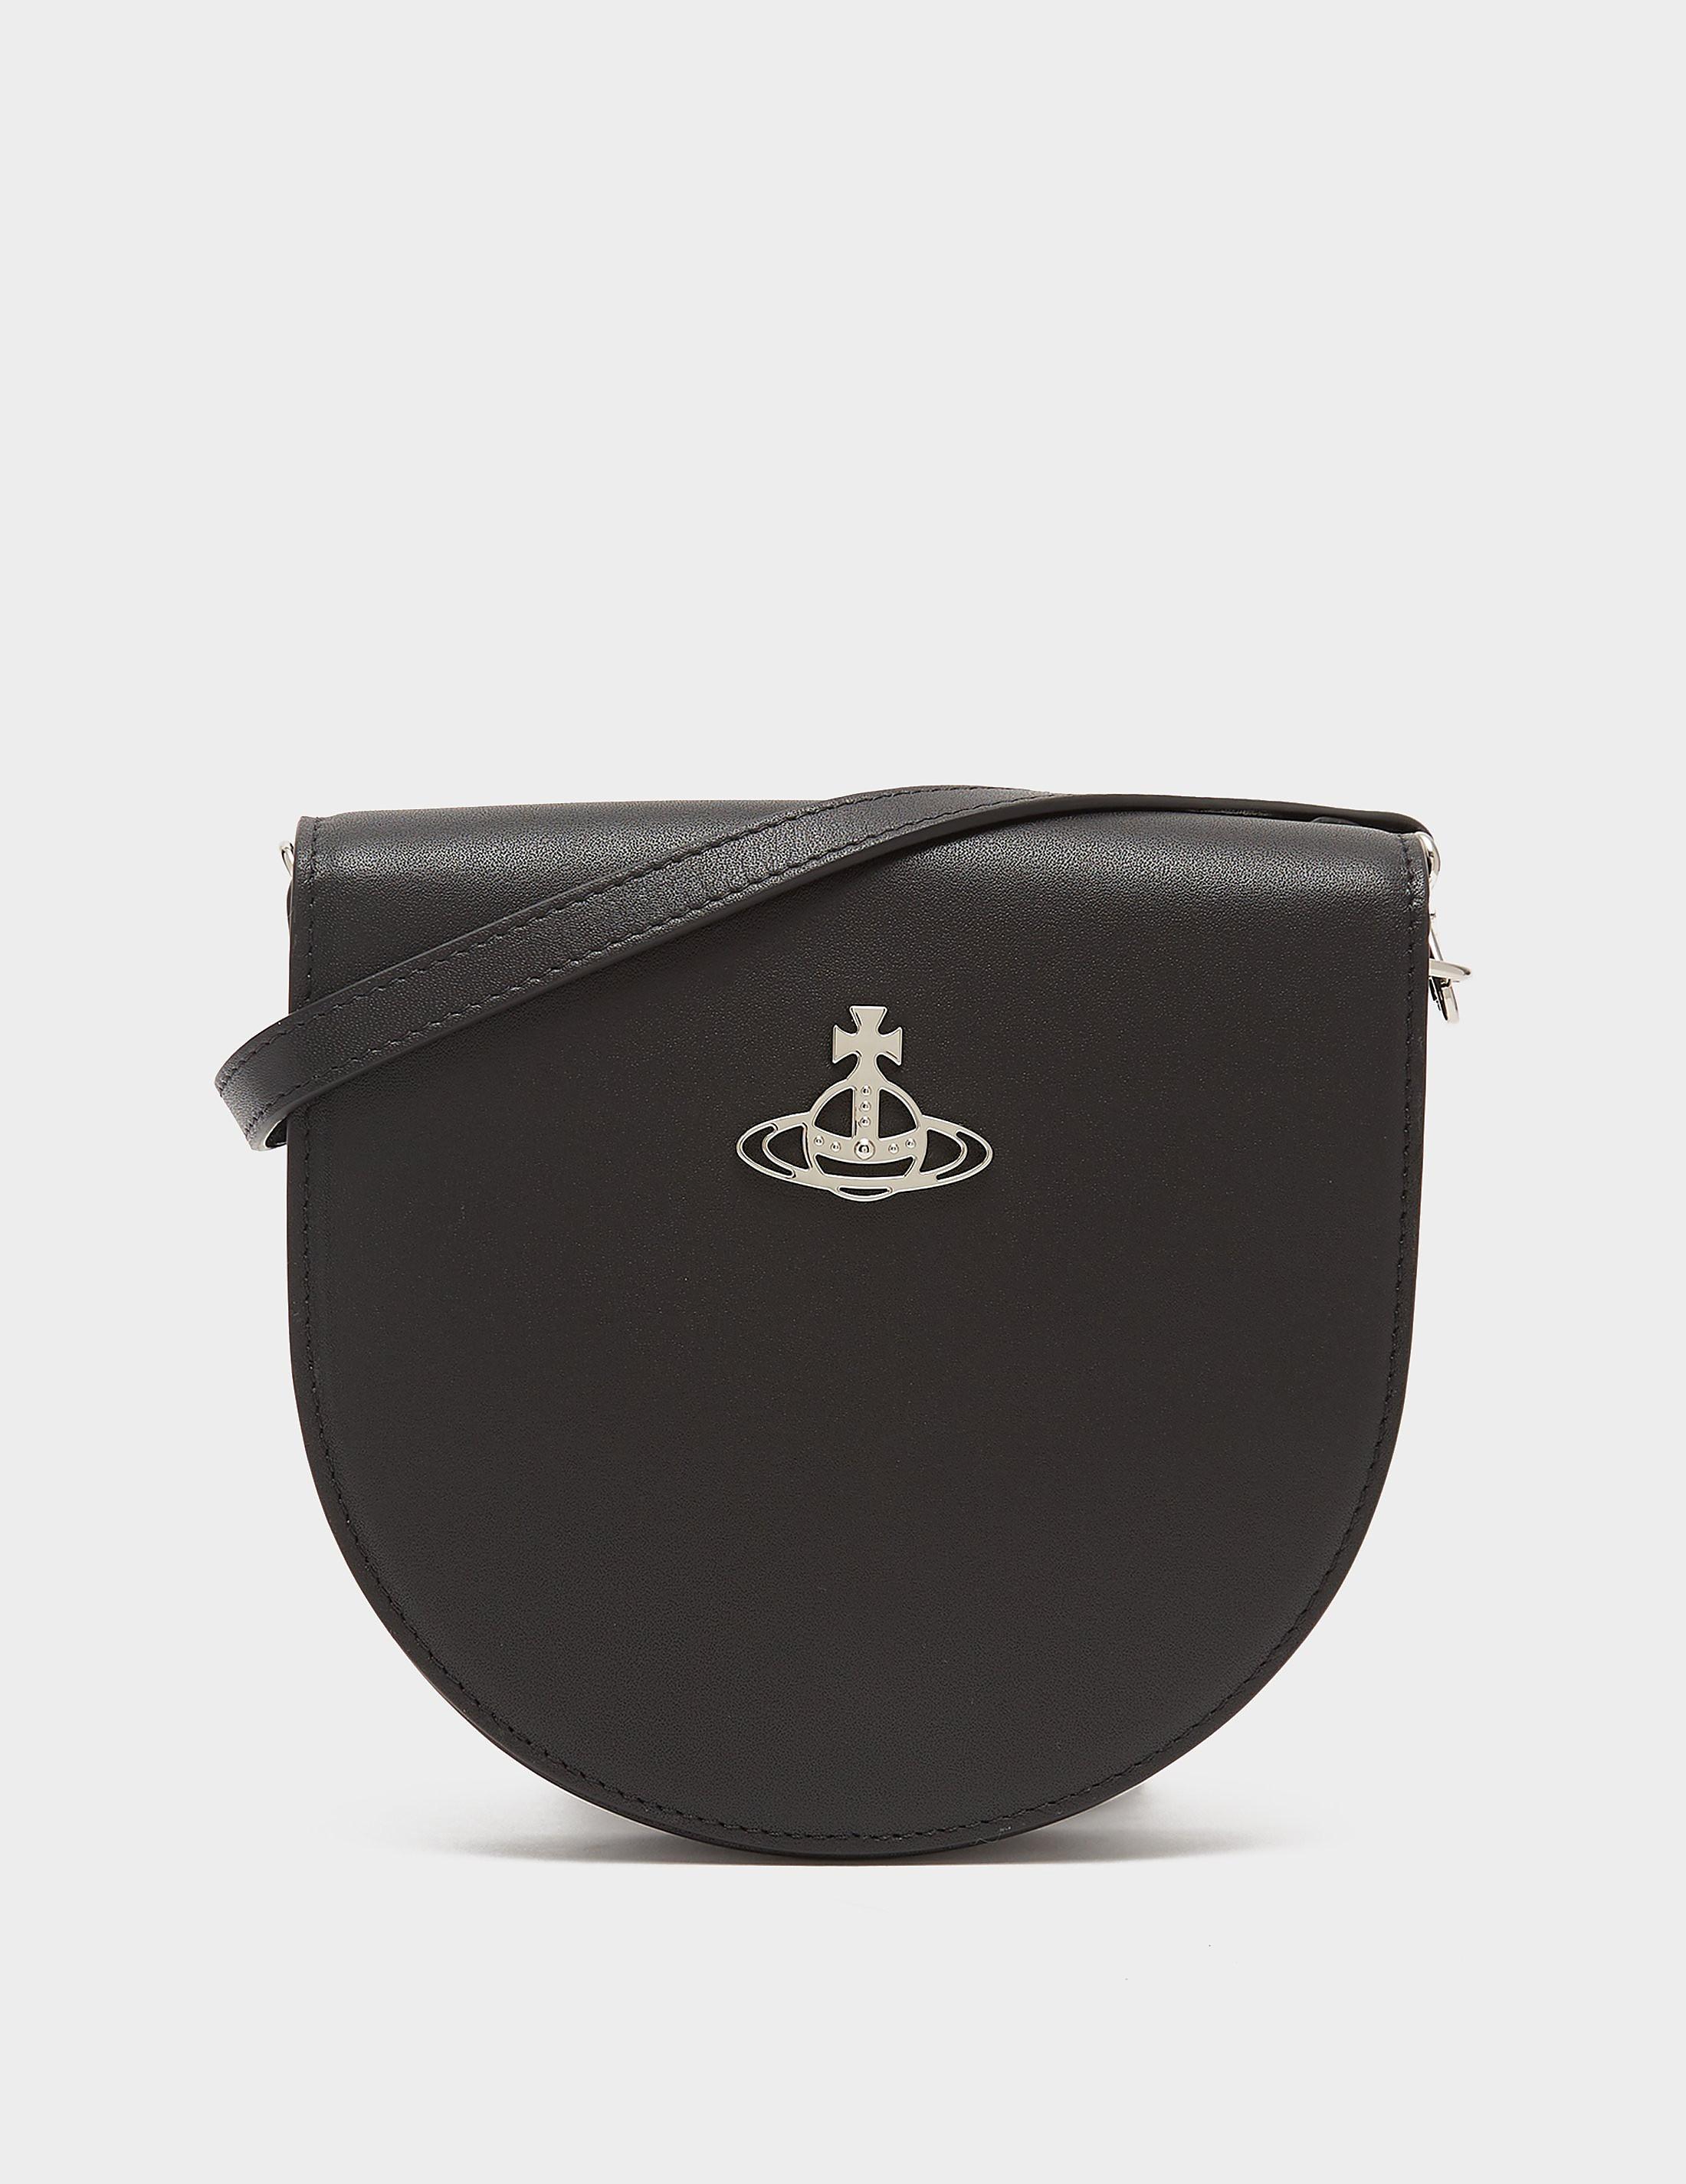 Vivienne Westwood Orb Leather Saddle Crossbody Bag in Black | Lyst UK